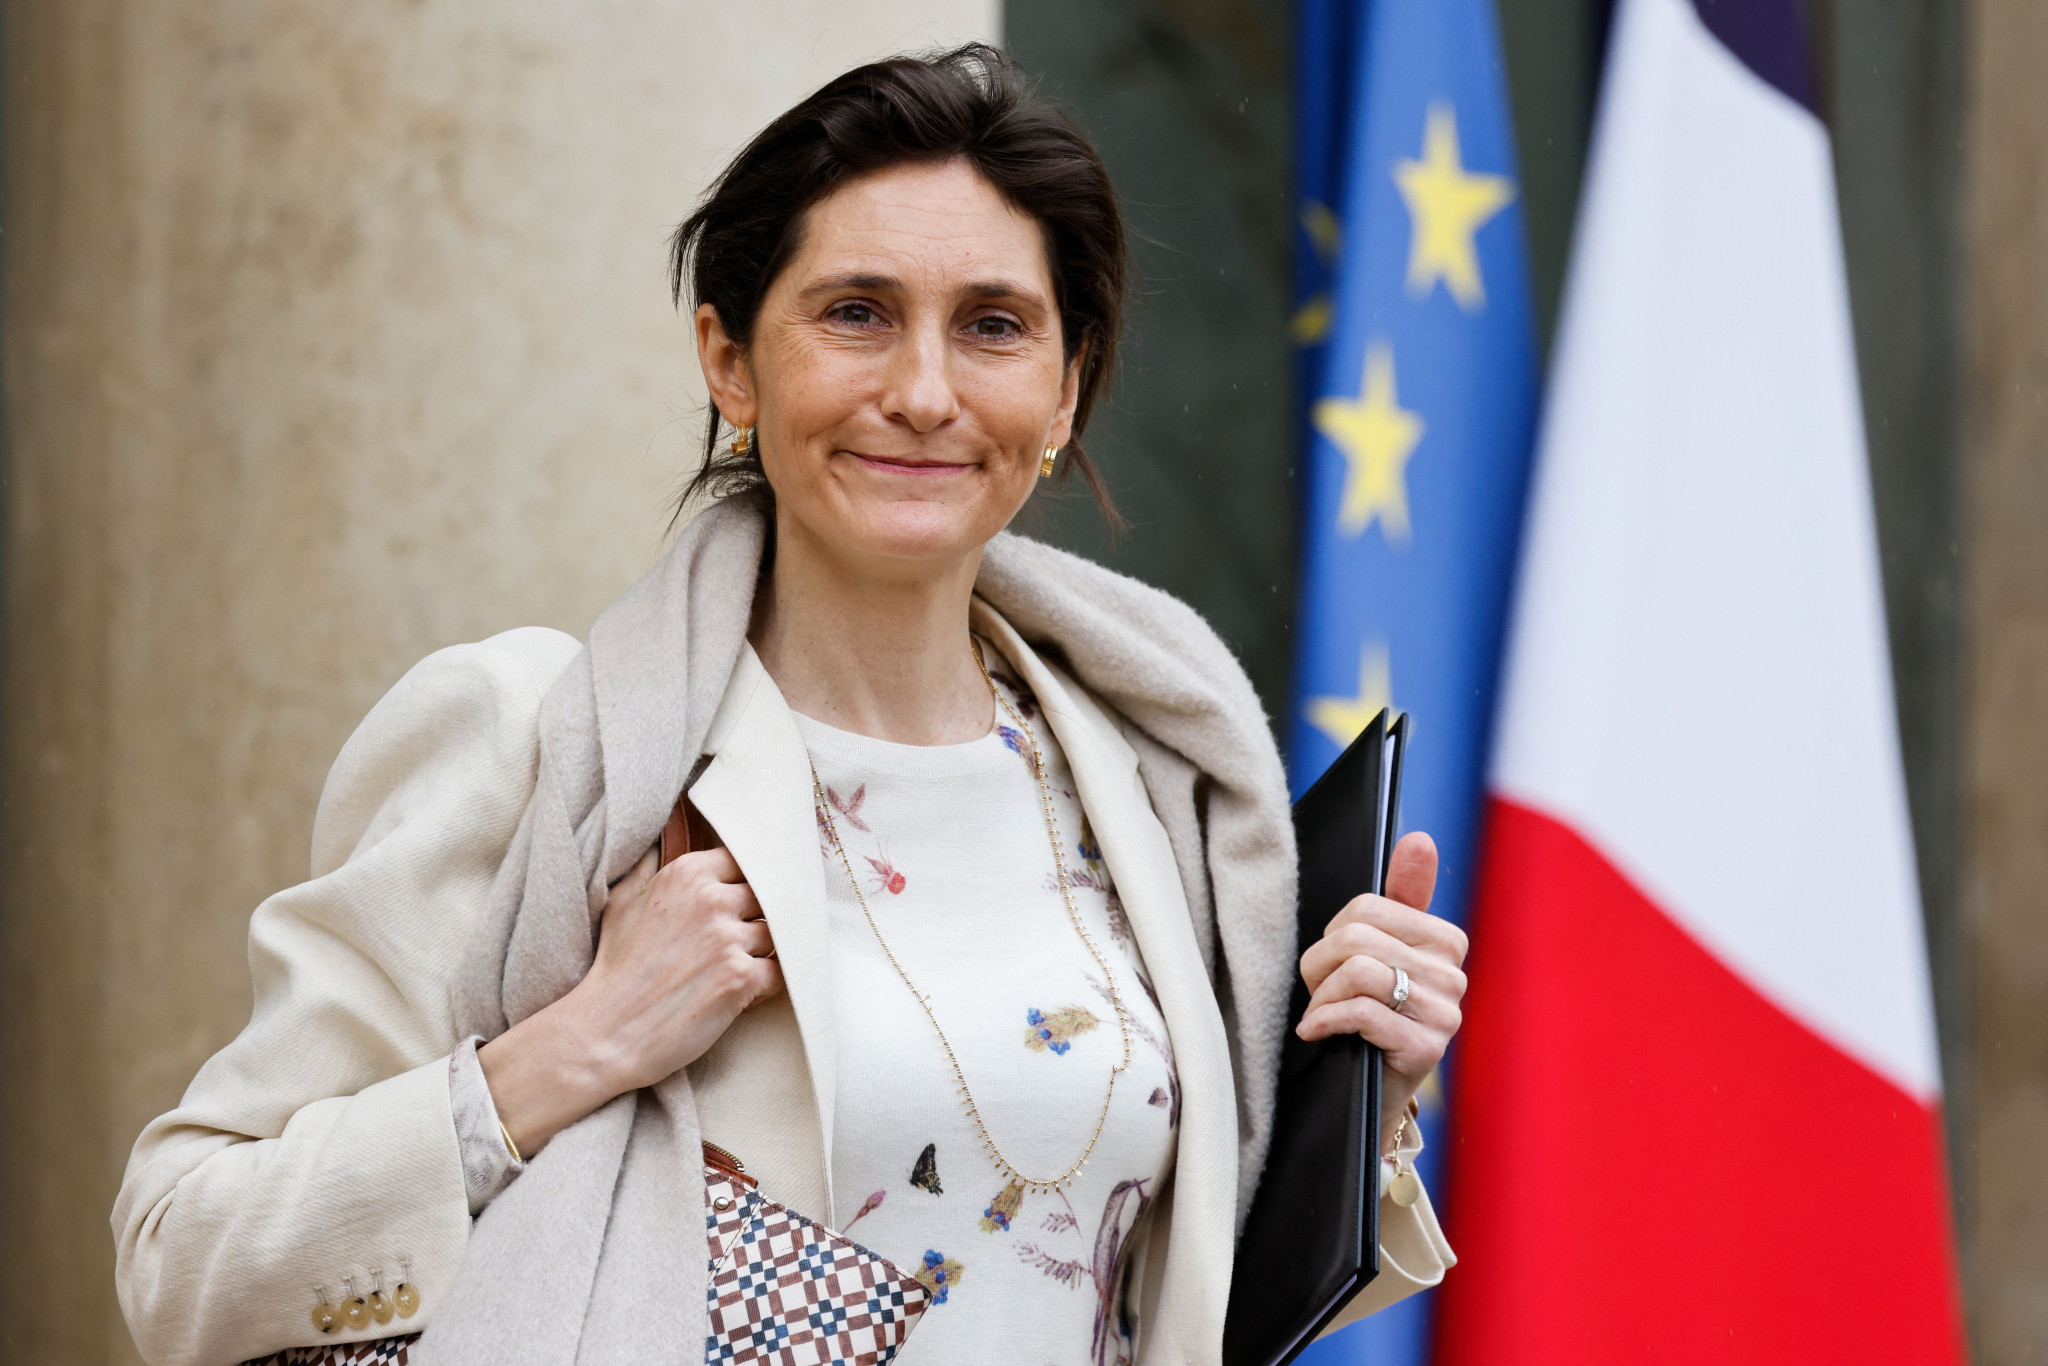 Oudéa-Castéra wants CNOSF to move quickly after Henriques exit to ensure Paris 2024 focus